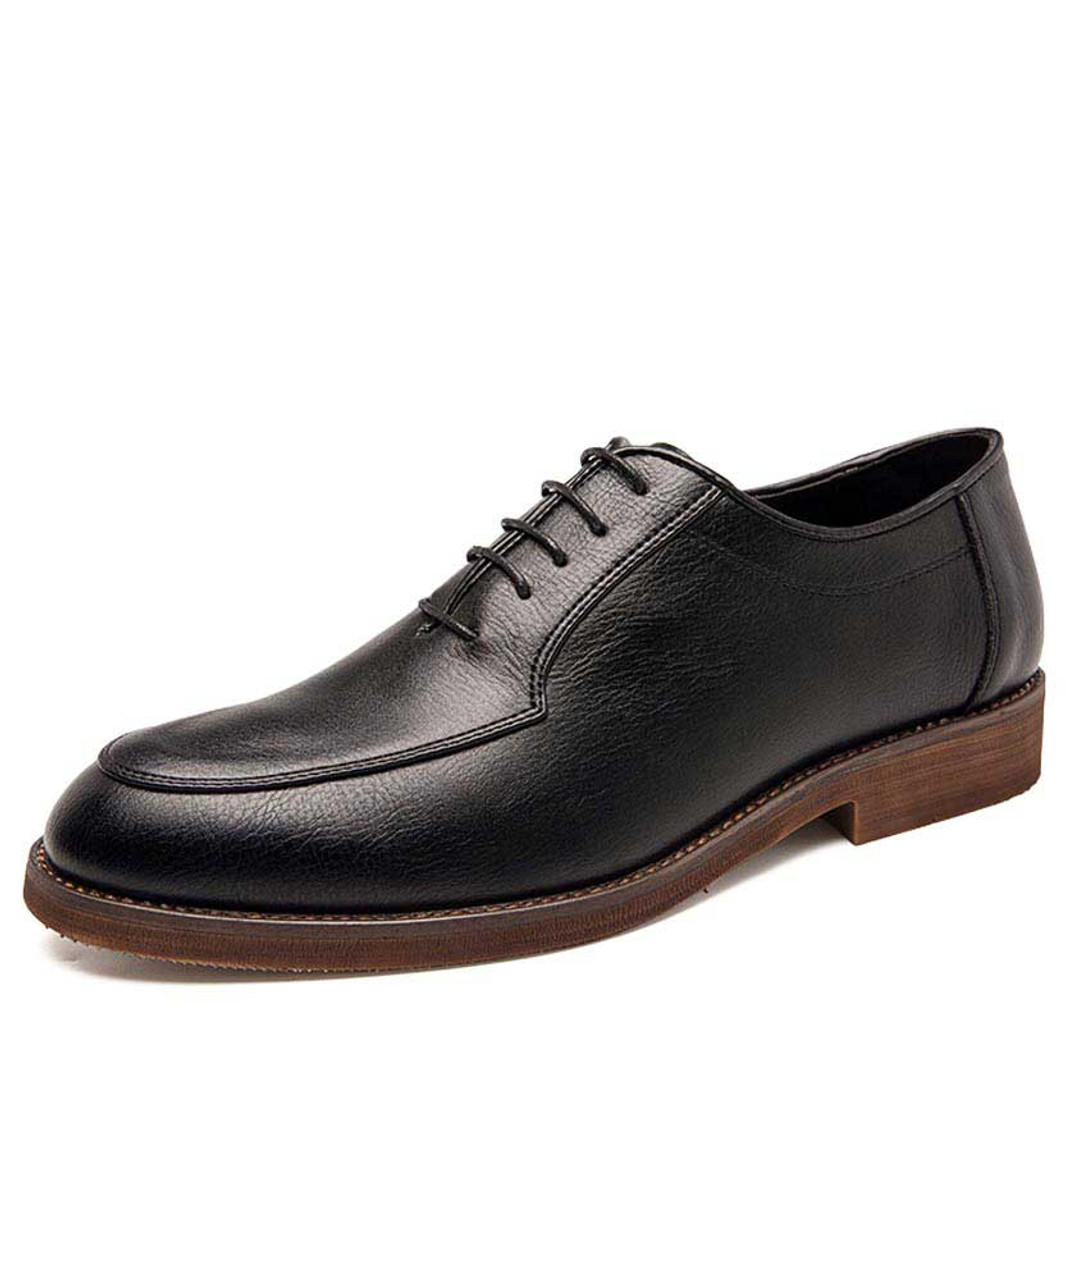 Men's Oxfords Snake Pattern Embossed Dress Shoes 5748 Black & Gray 